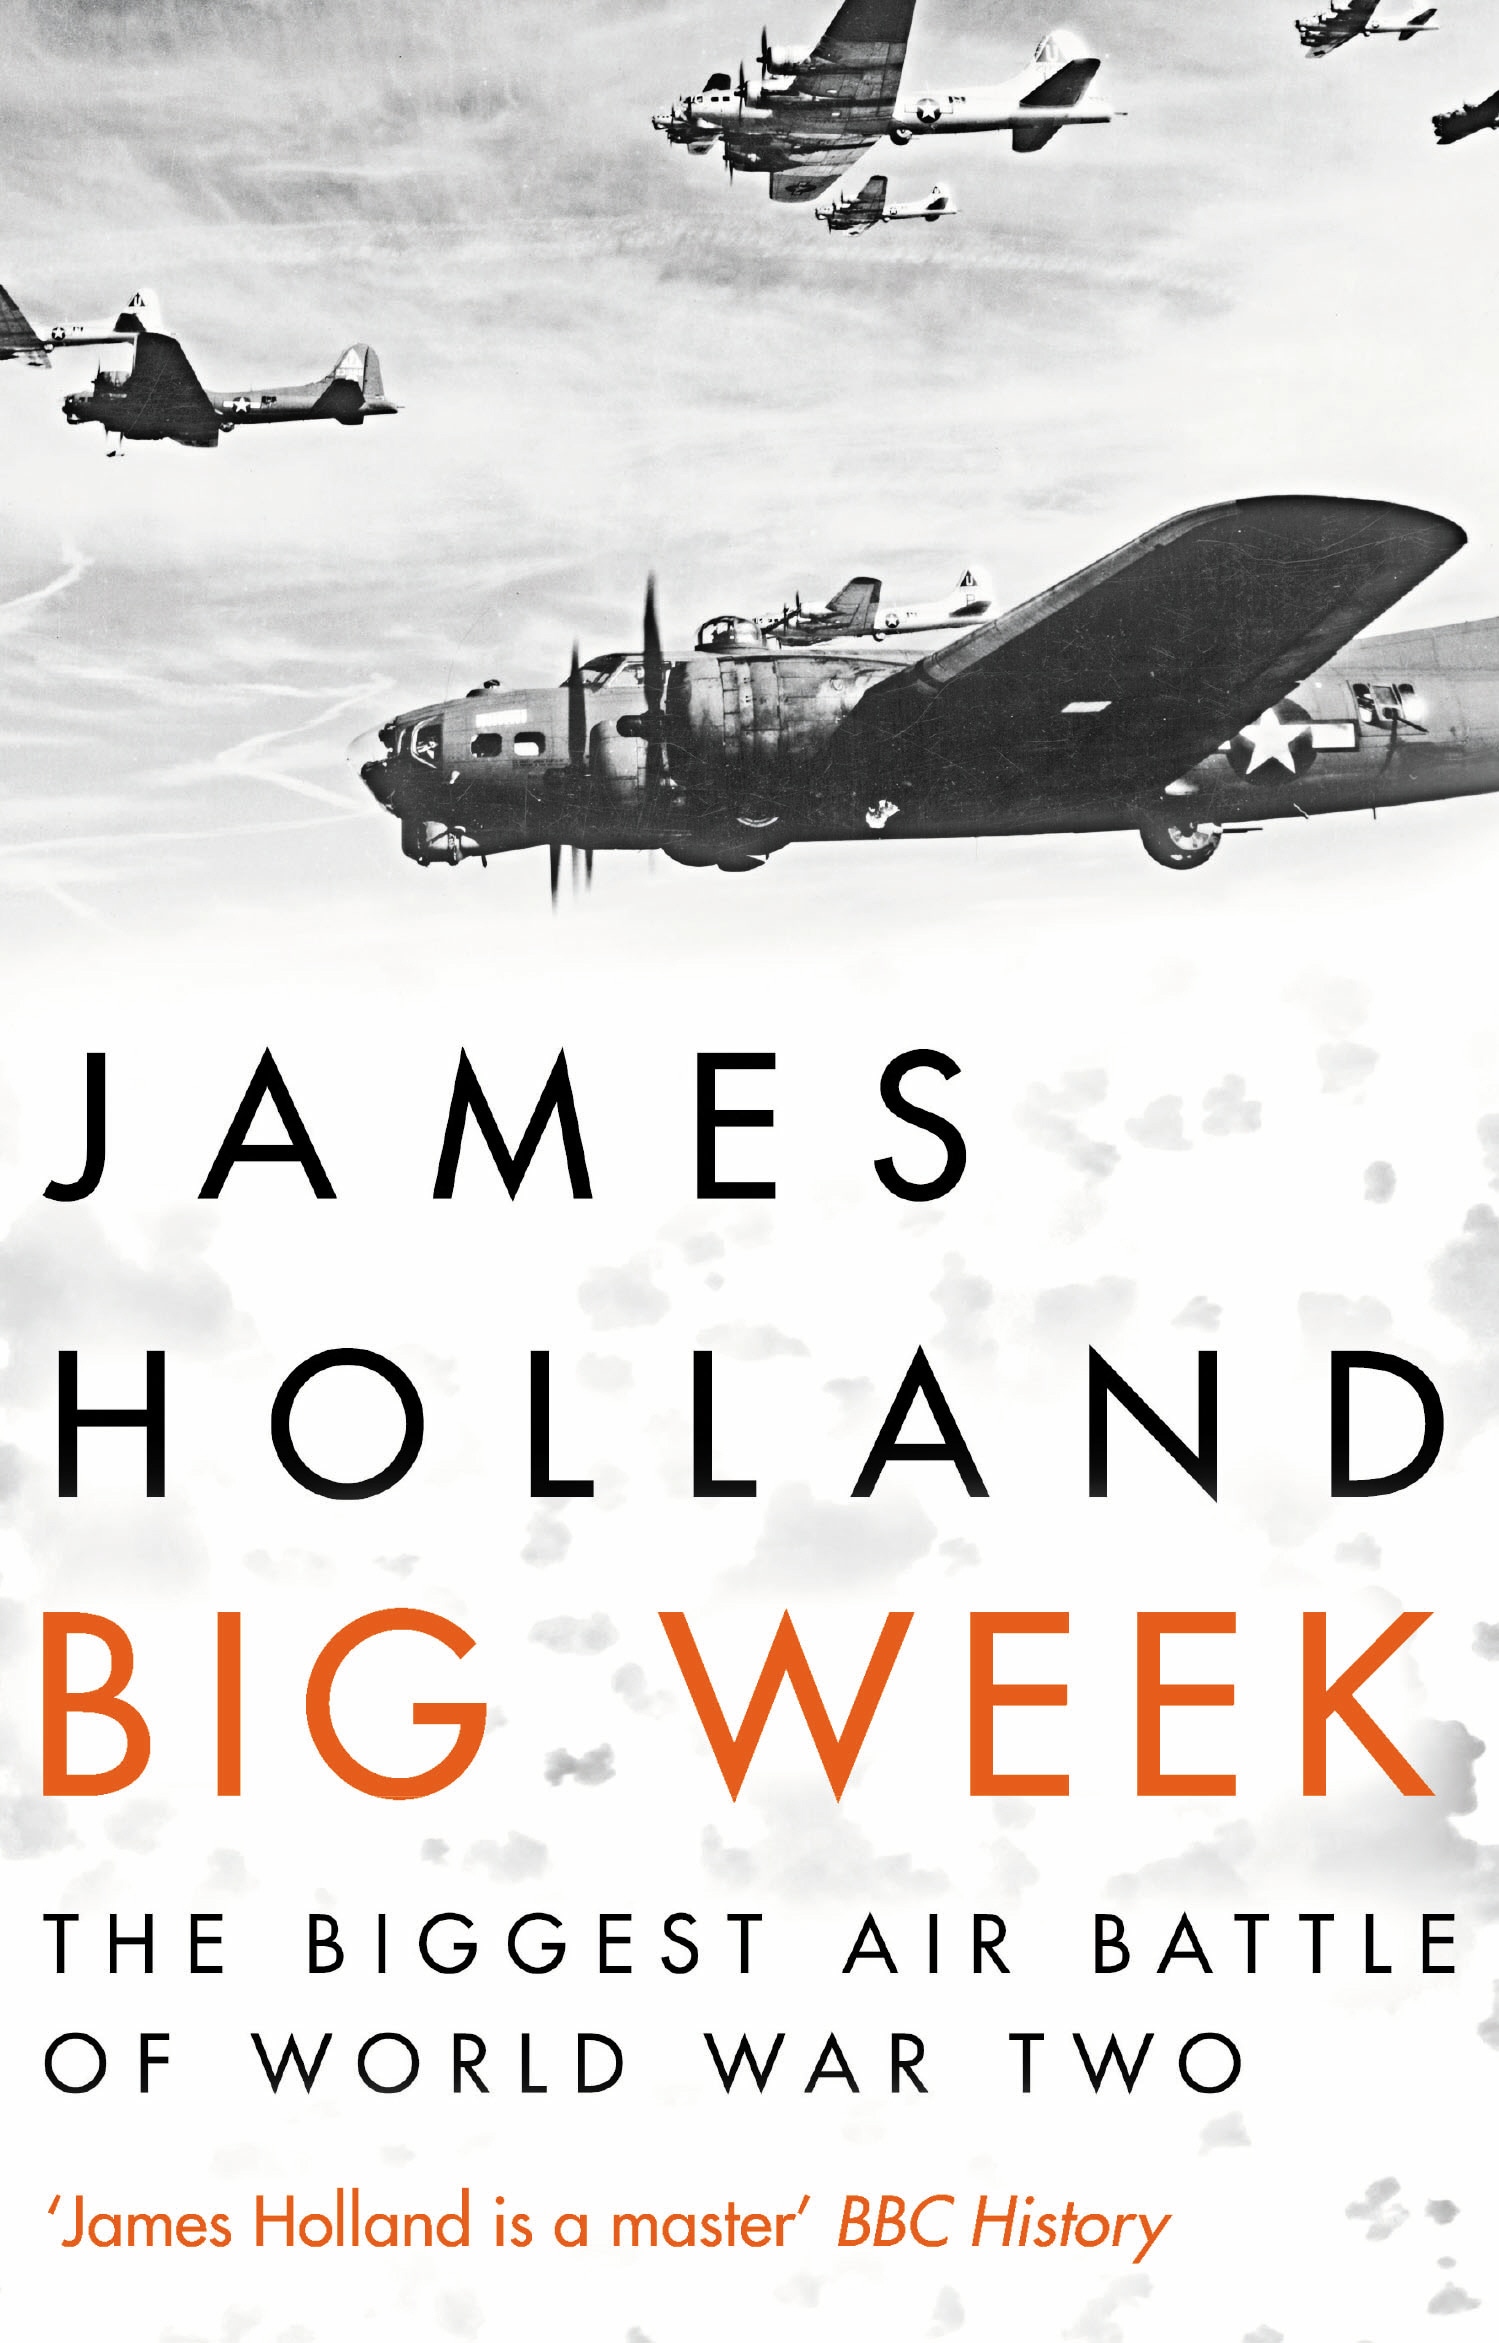 Book “Big Week” by James Holland — February 7, 2019